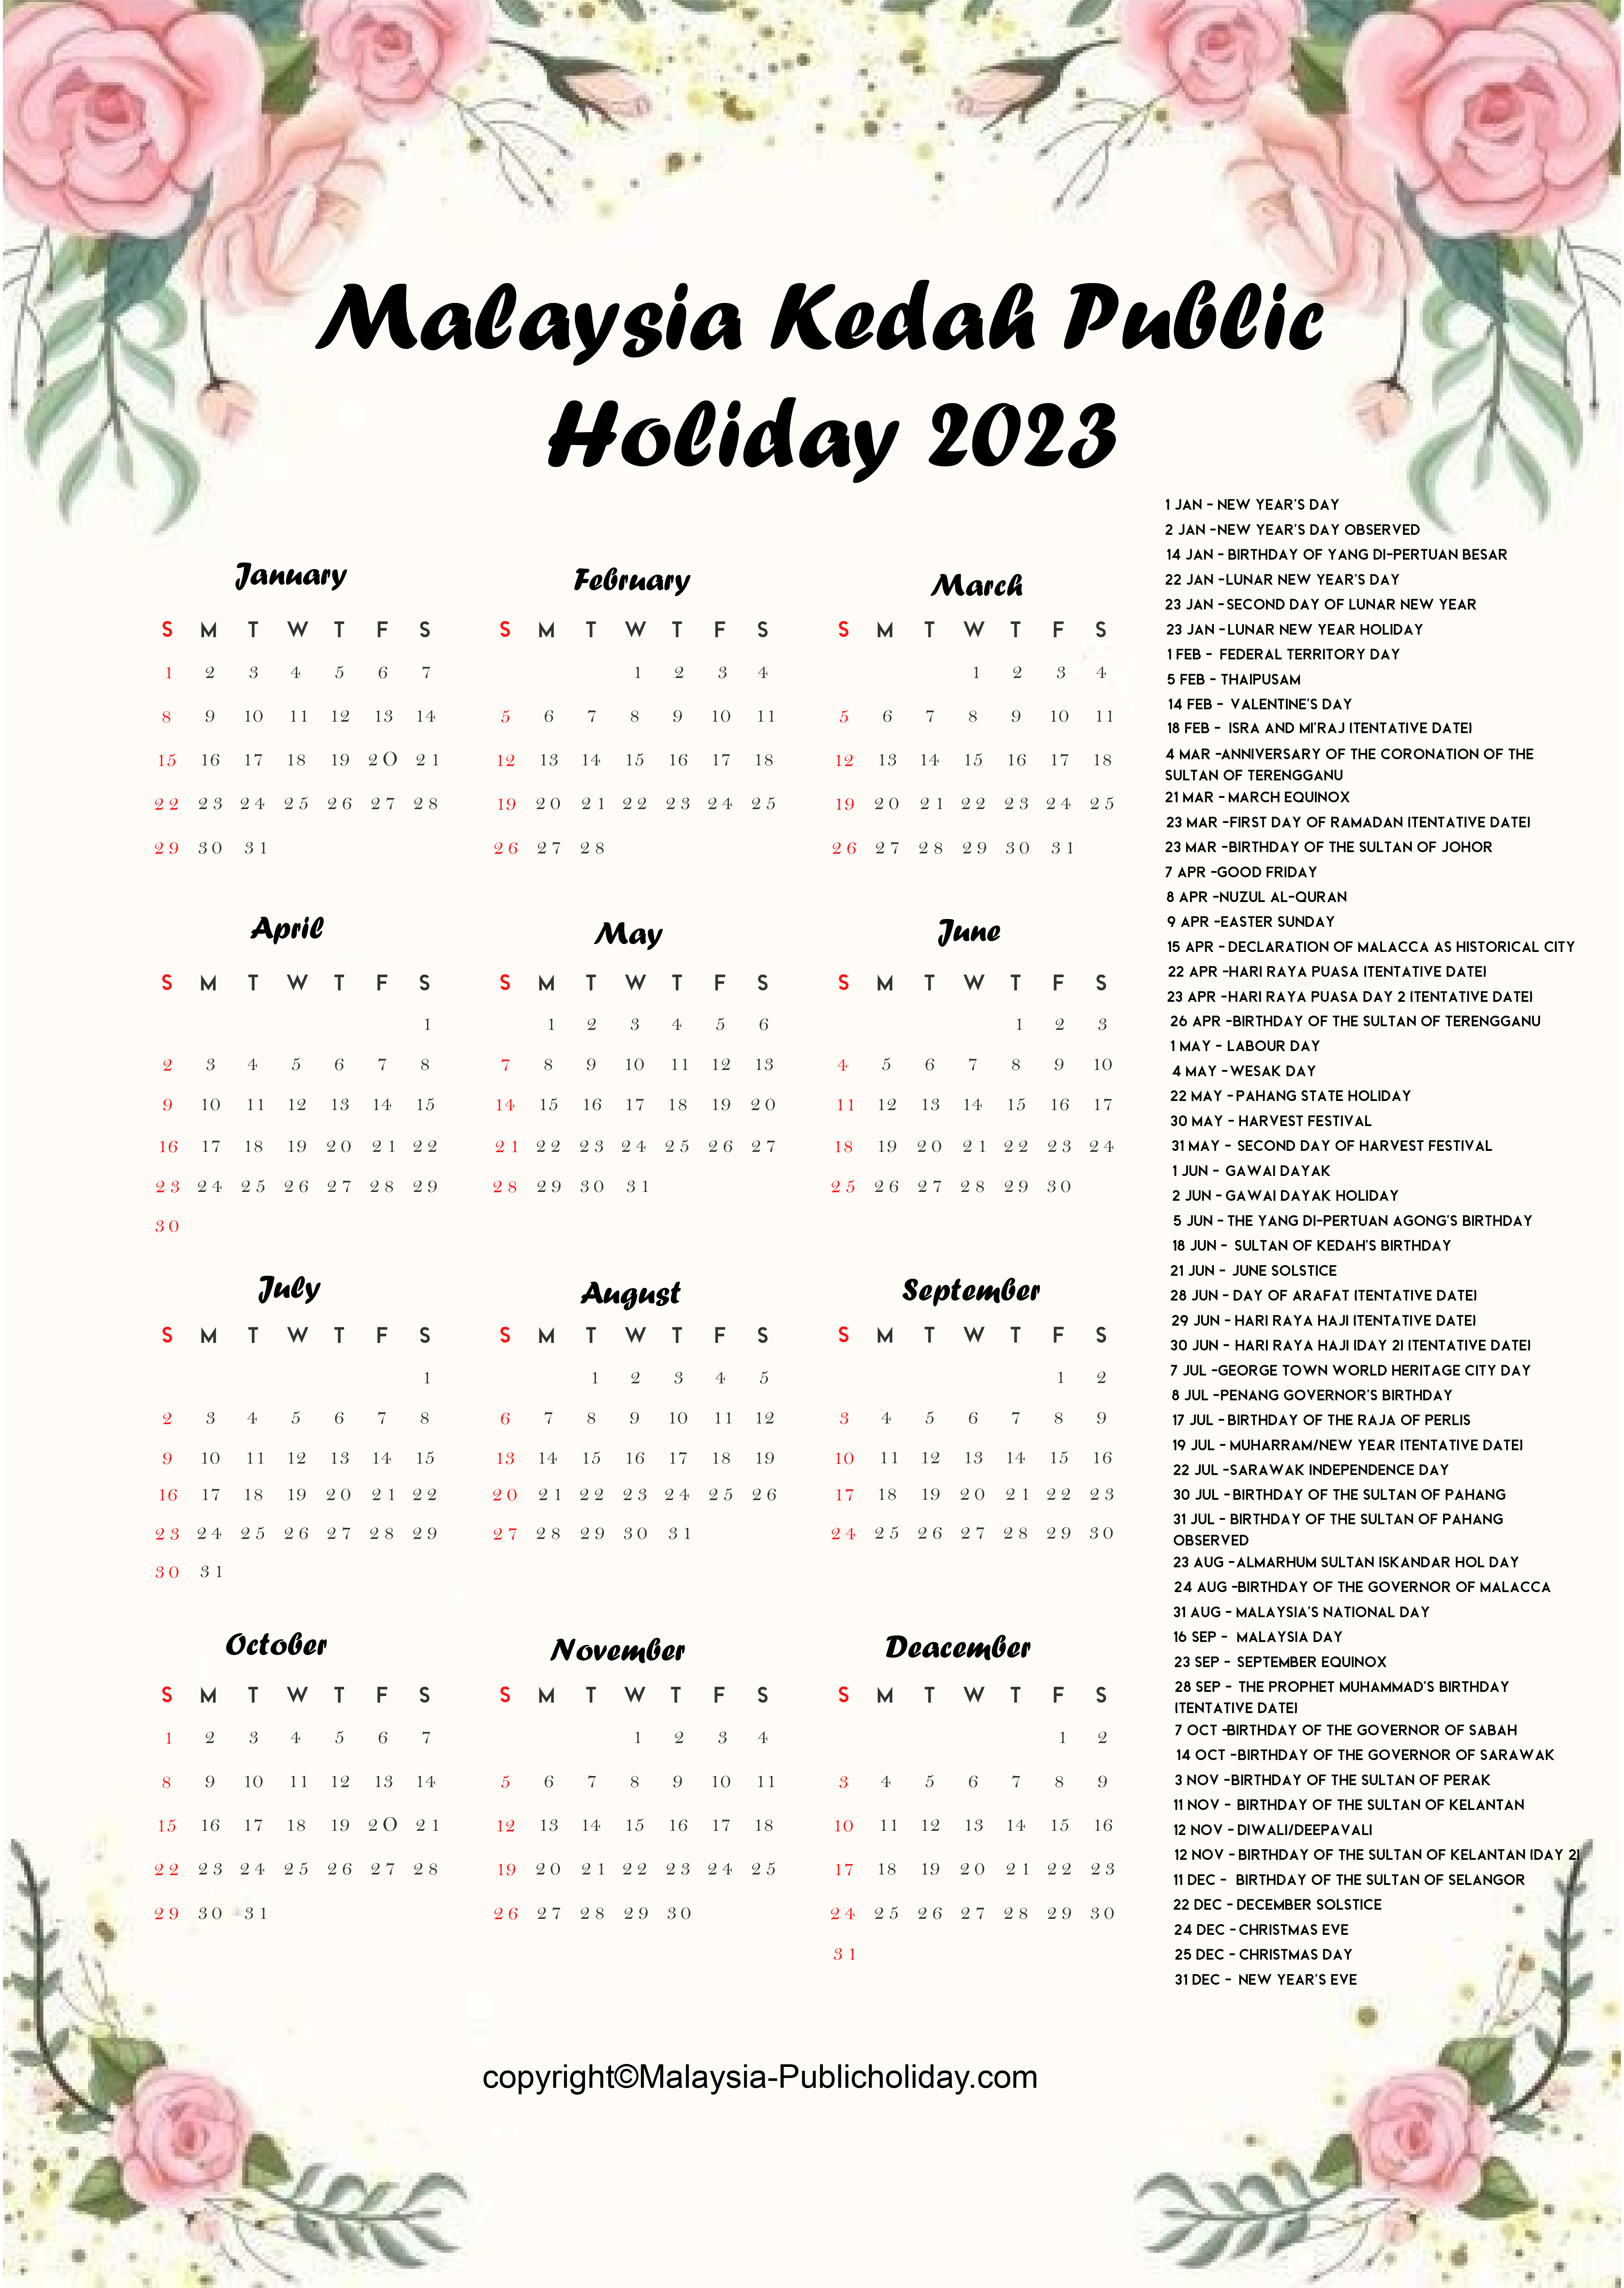 Kedah Public Holiday 2023